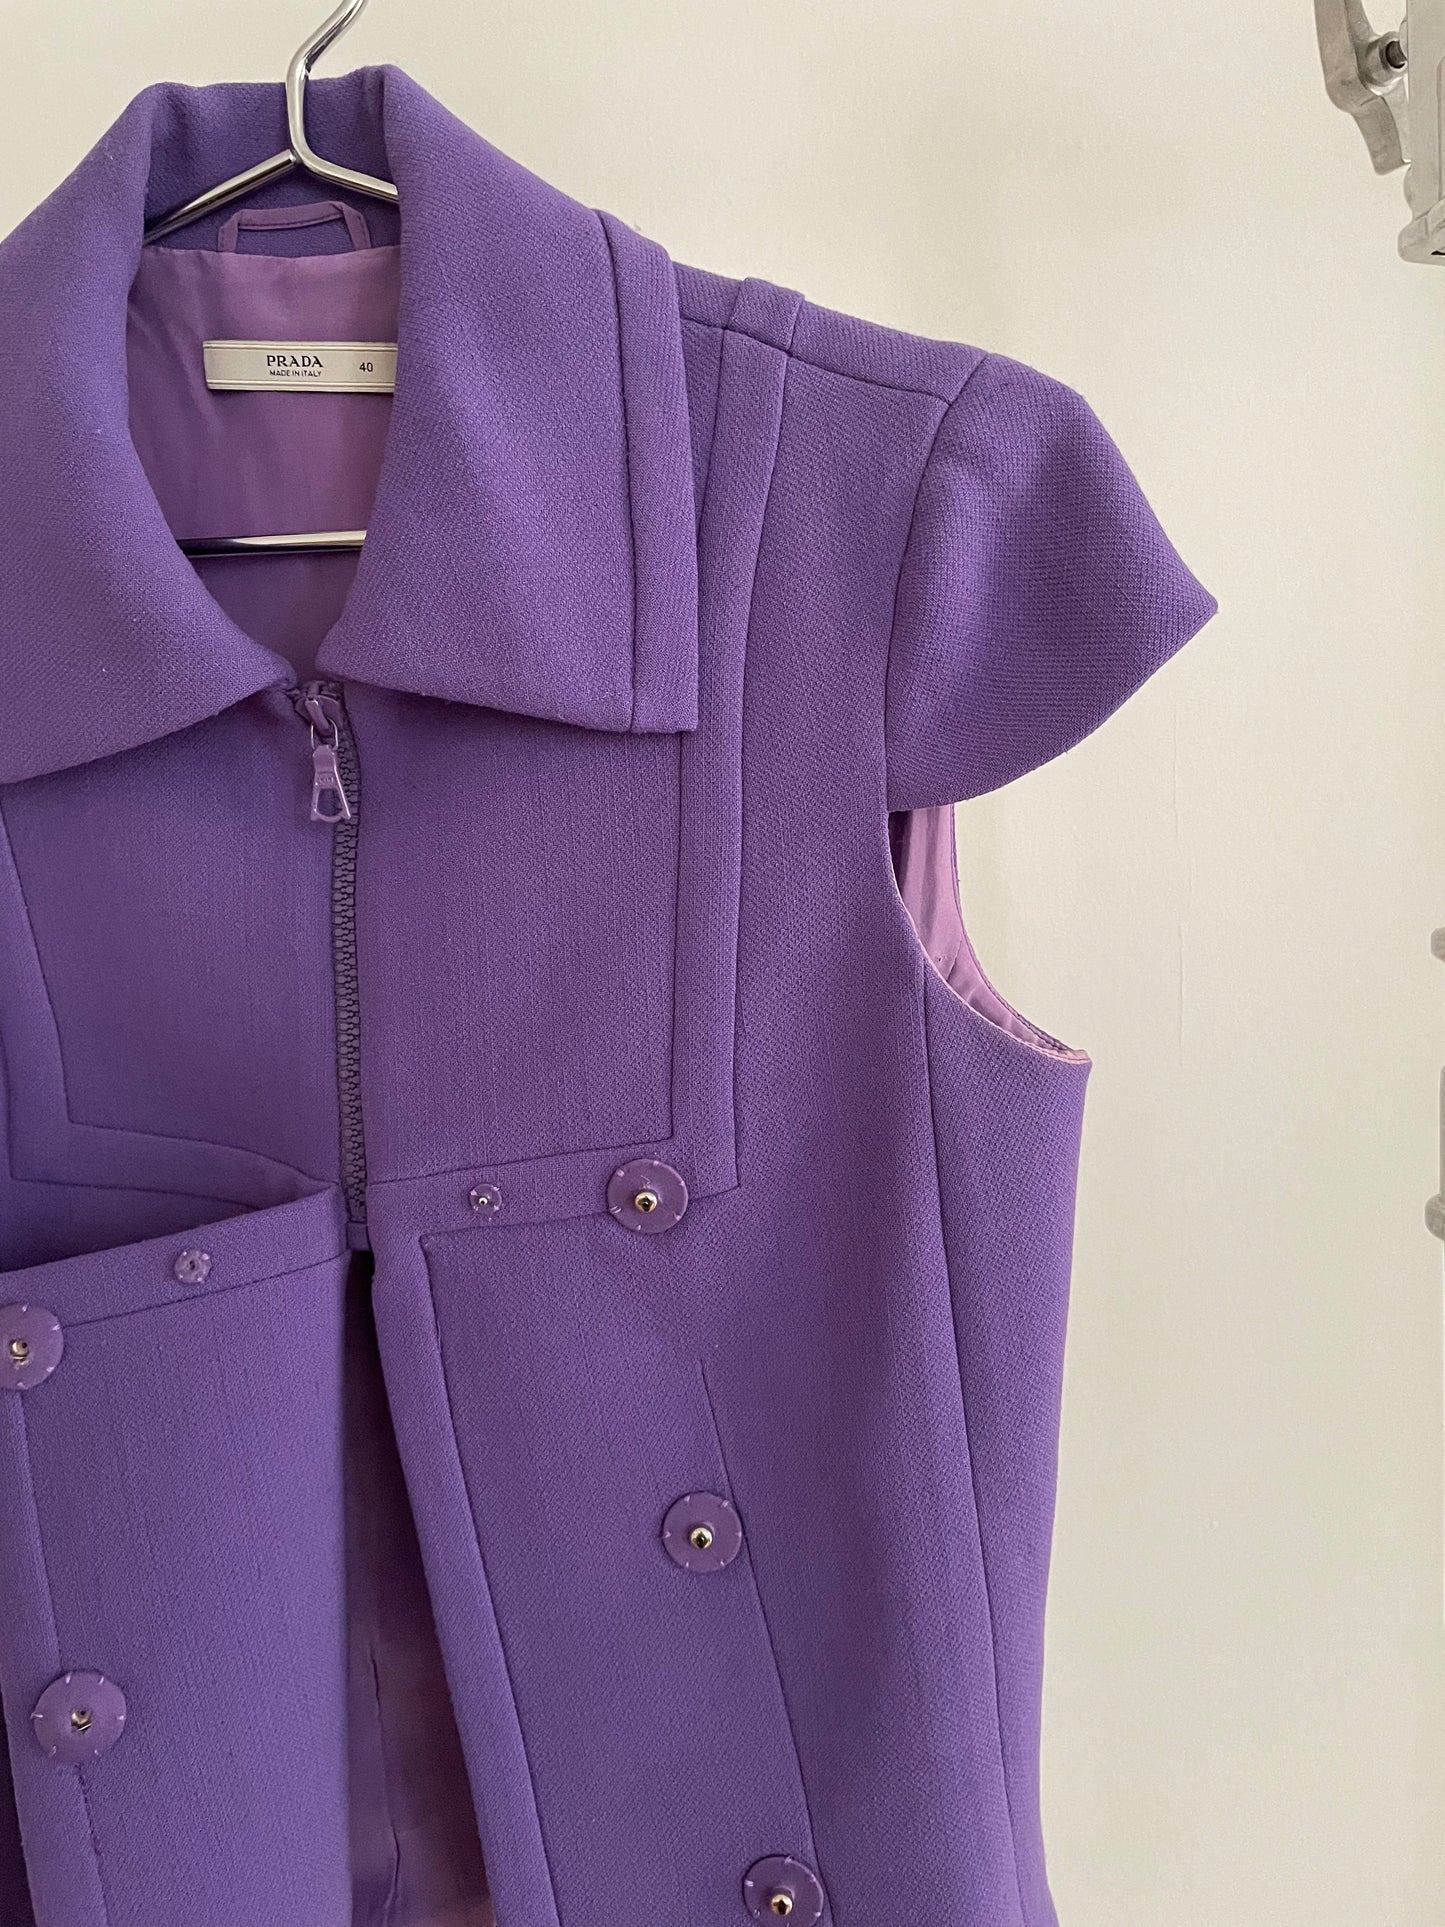 Detail view of vintage womens Prada fall/winter 2001 purple top